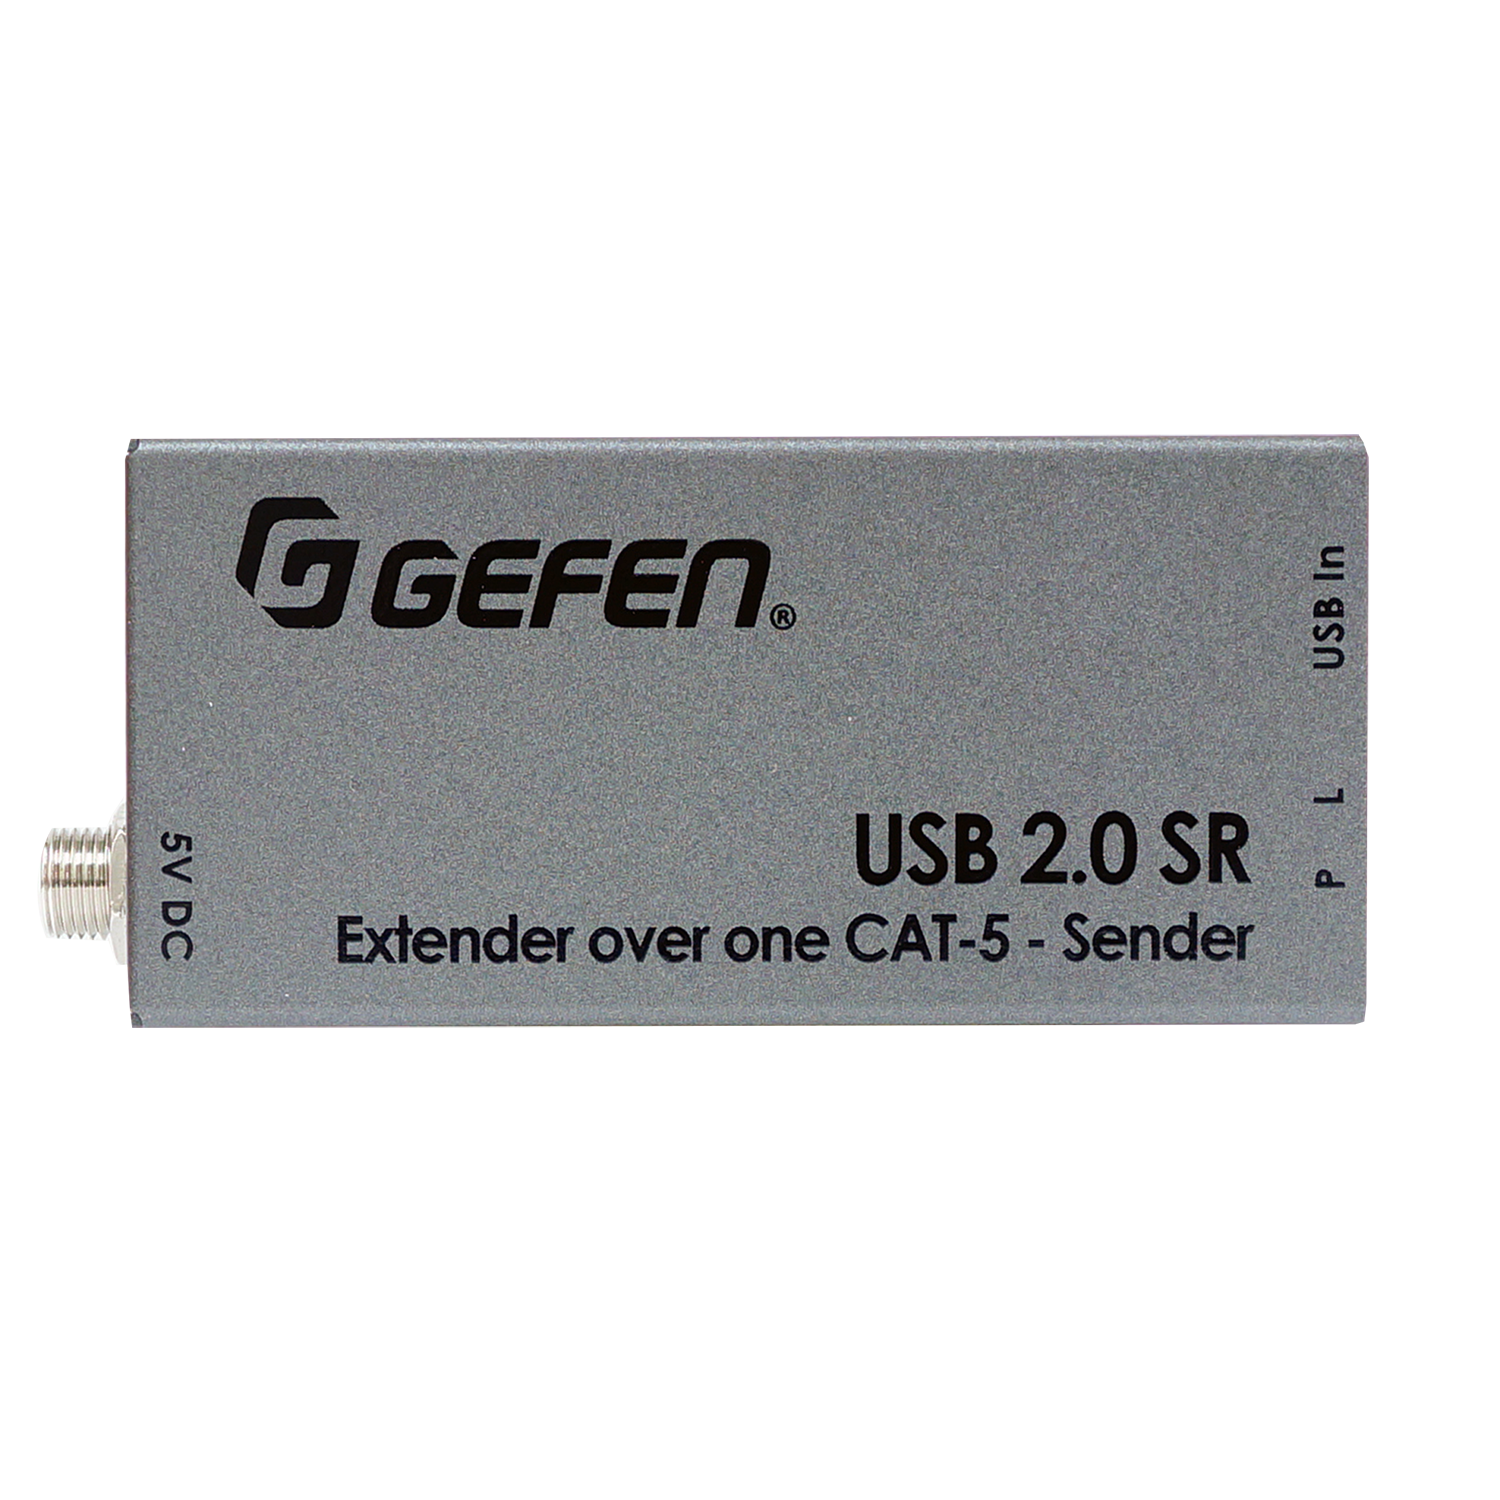 Gefen USB 2.0 SR Extender over one CAT-5 Cable | Gefen